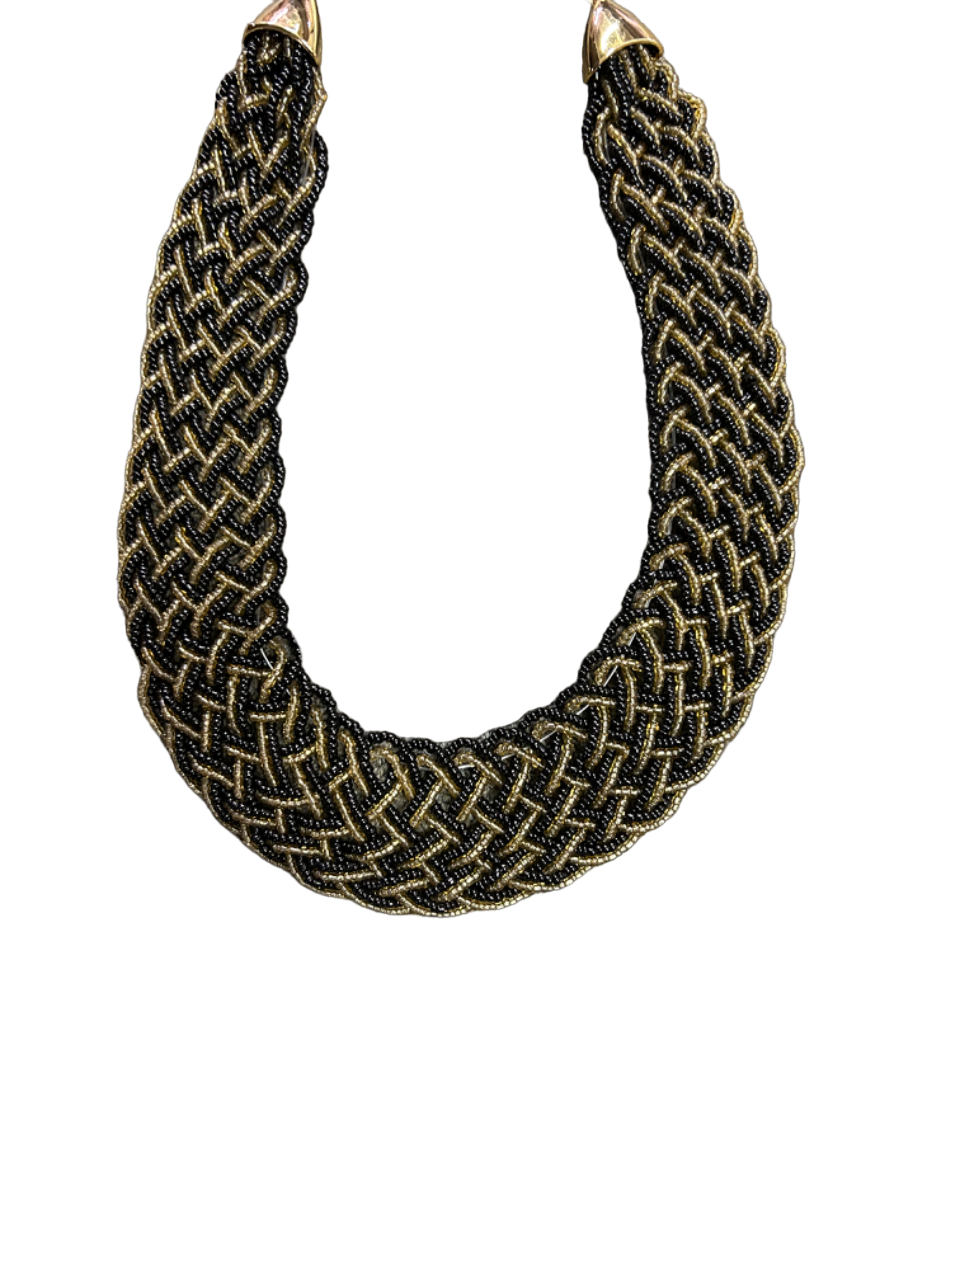 Black & Gold Bead Braid Necklace